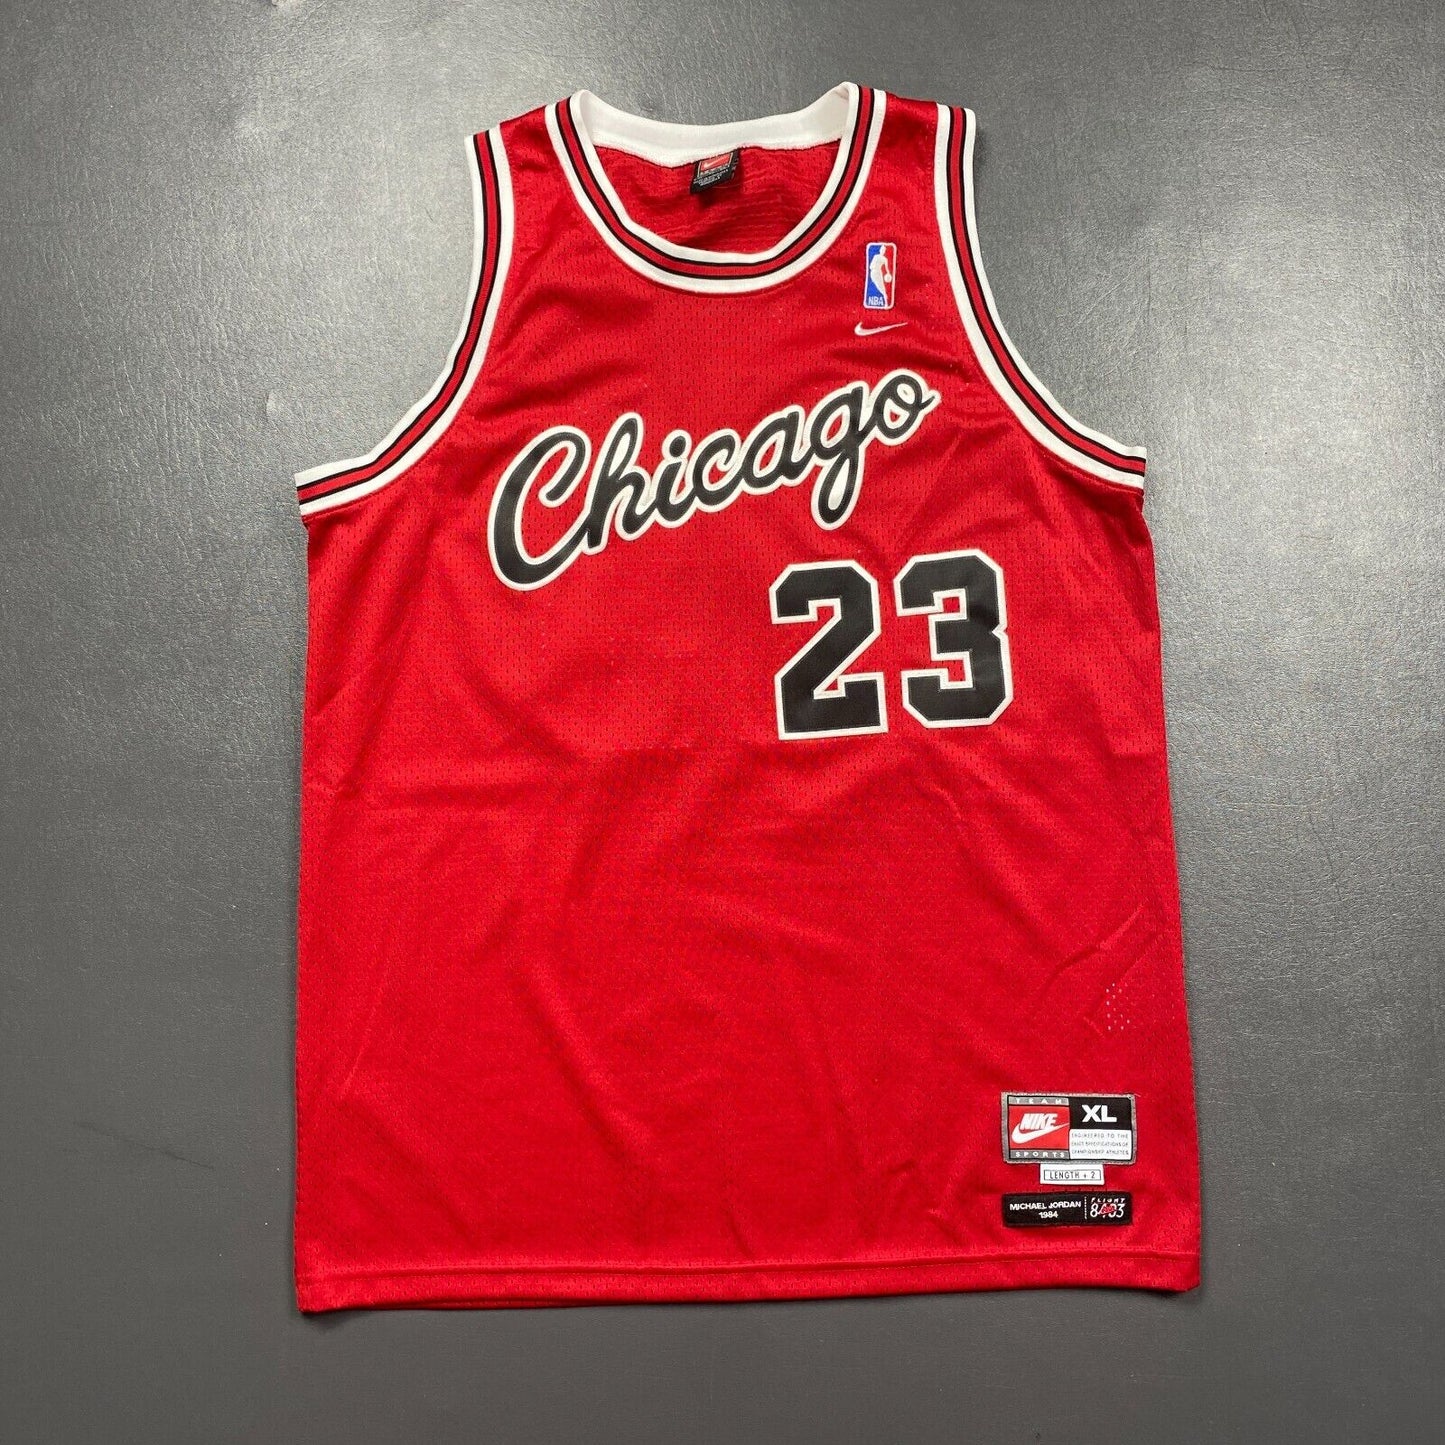 100% Authentic Michael Jordan Vintage Nike 84 85 Bulls Rookie Jersey Size XL 48